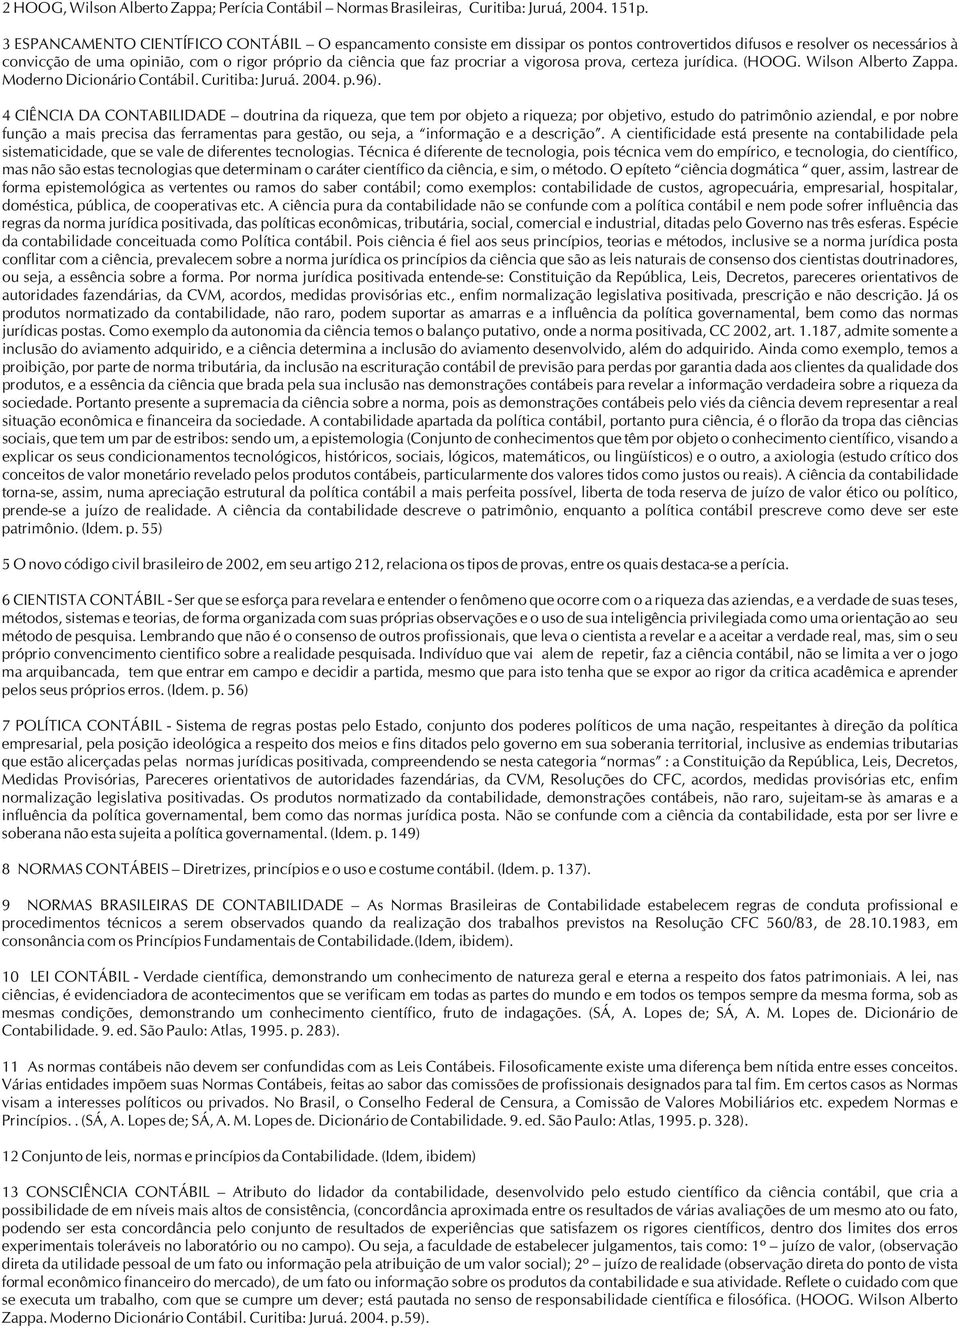 procriar a vigorosa prova, certeza jurídica. (HOOG. Wilson Alberto Zappa. Moderno Dicionário Contábil. Curitiba: Juruá. 2004. p.96).